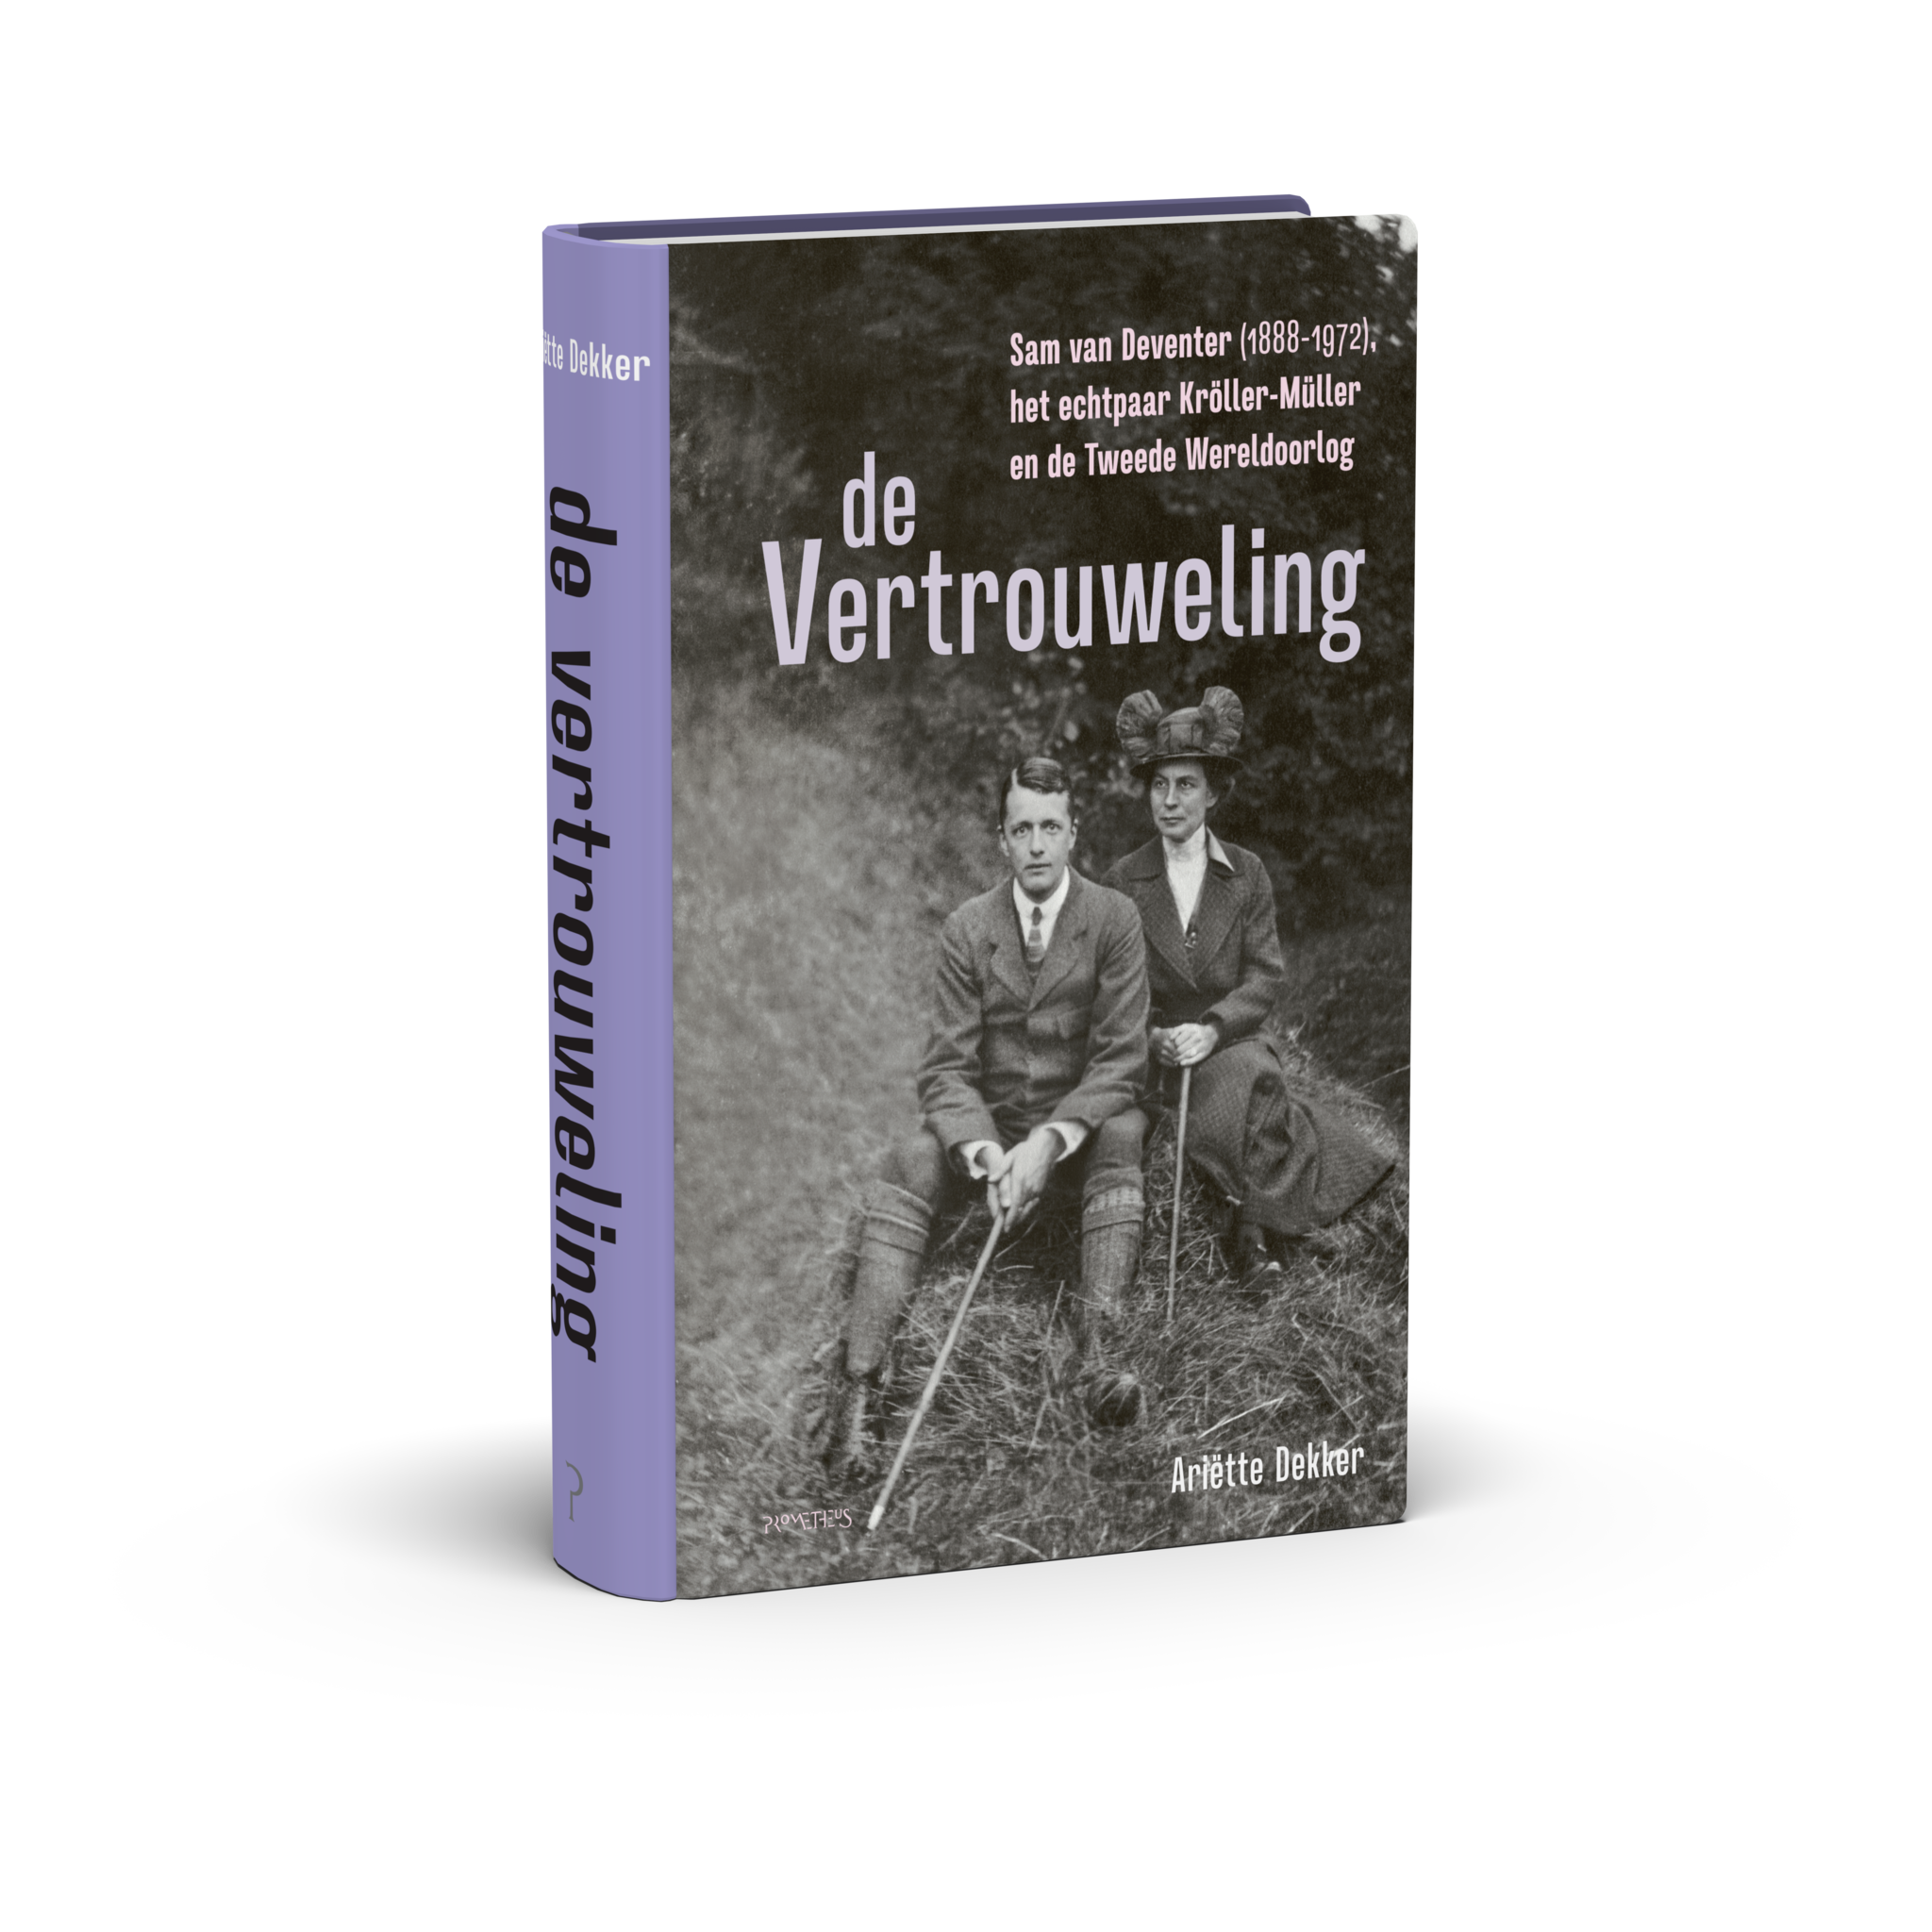 The Confidant. Sam van Deventer, the Kröller-Müller couple and the Second World War